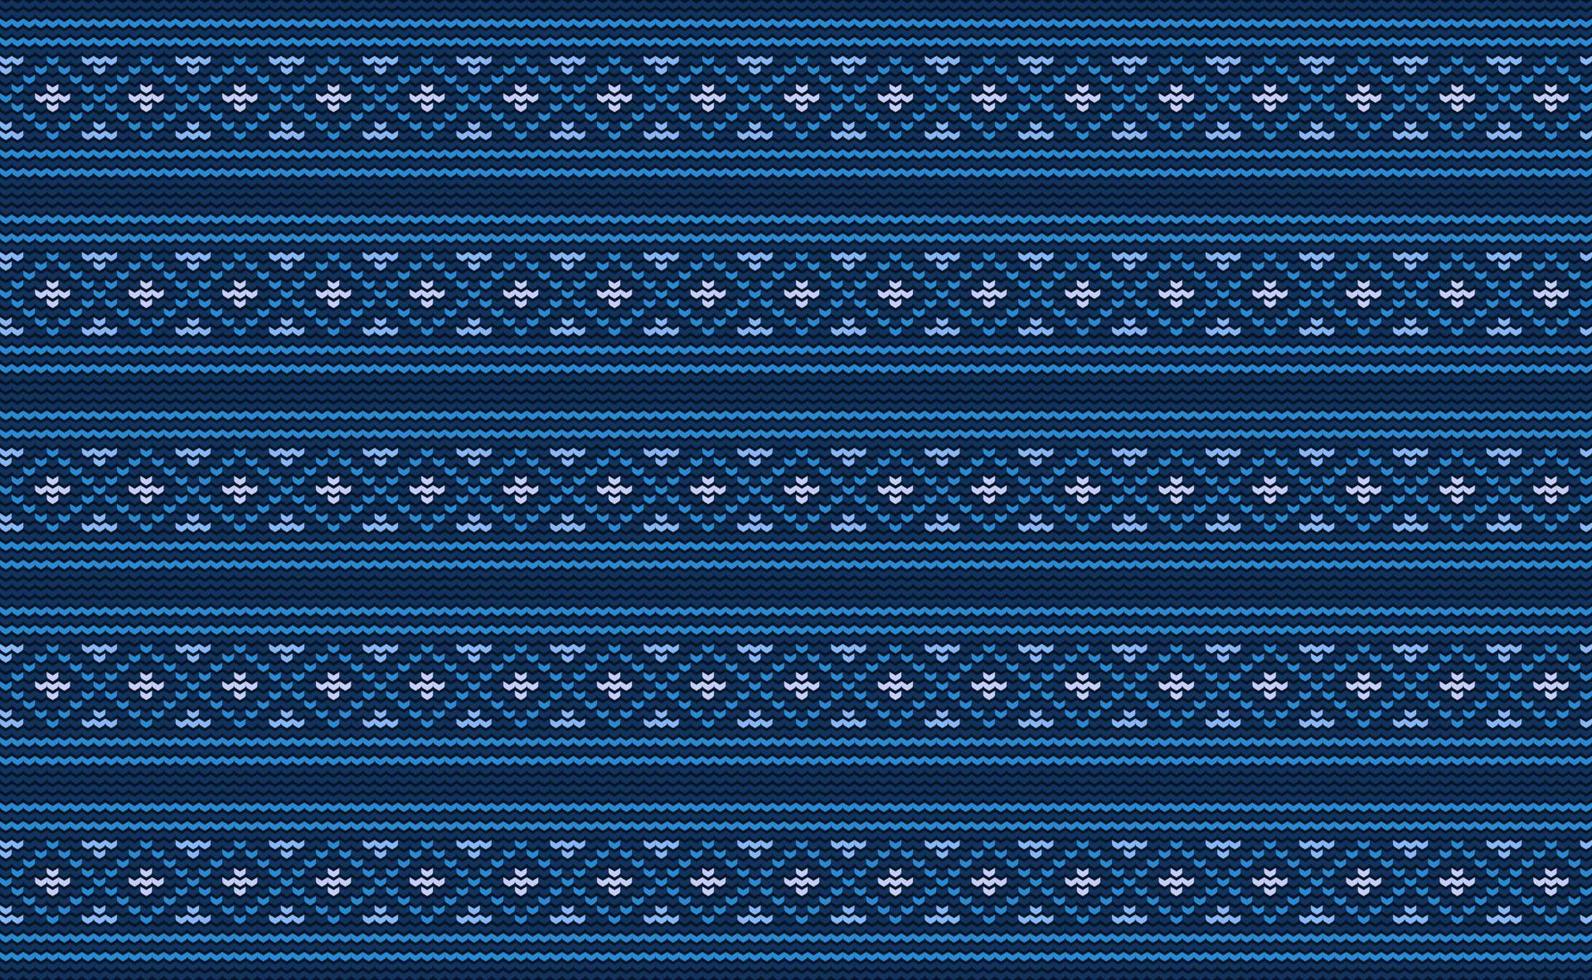 blå sicksack- broderi mönster, romb stickat upprepa bakgrund, vektor textil- mall tapet